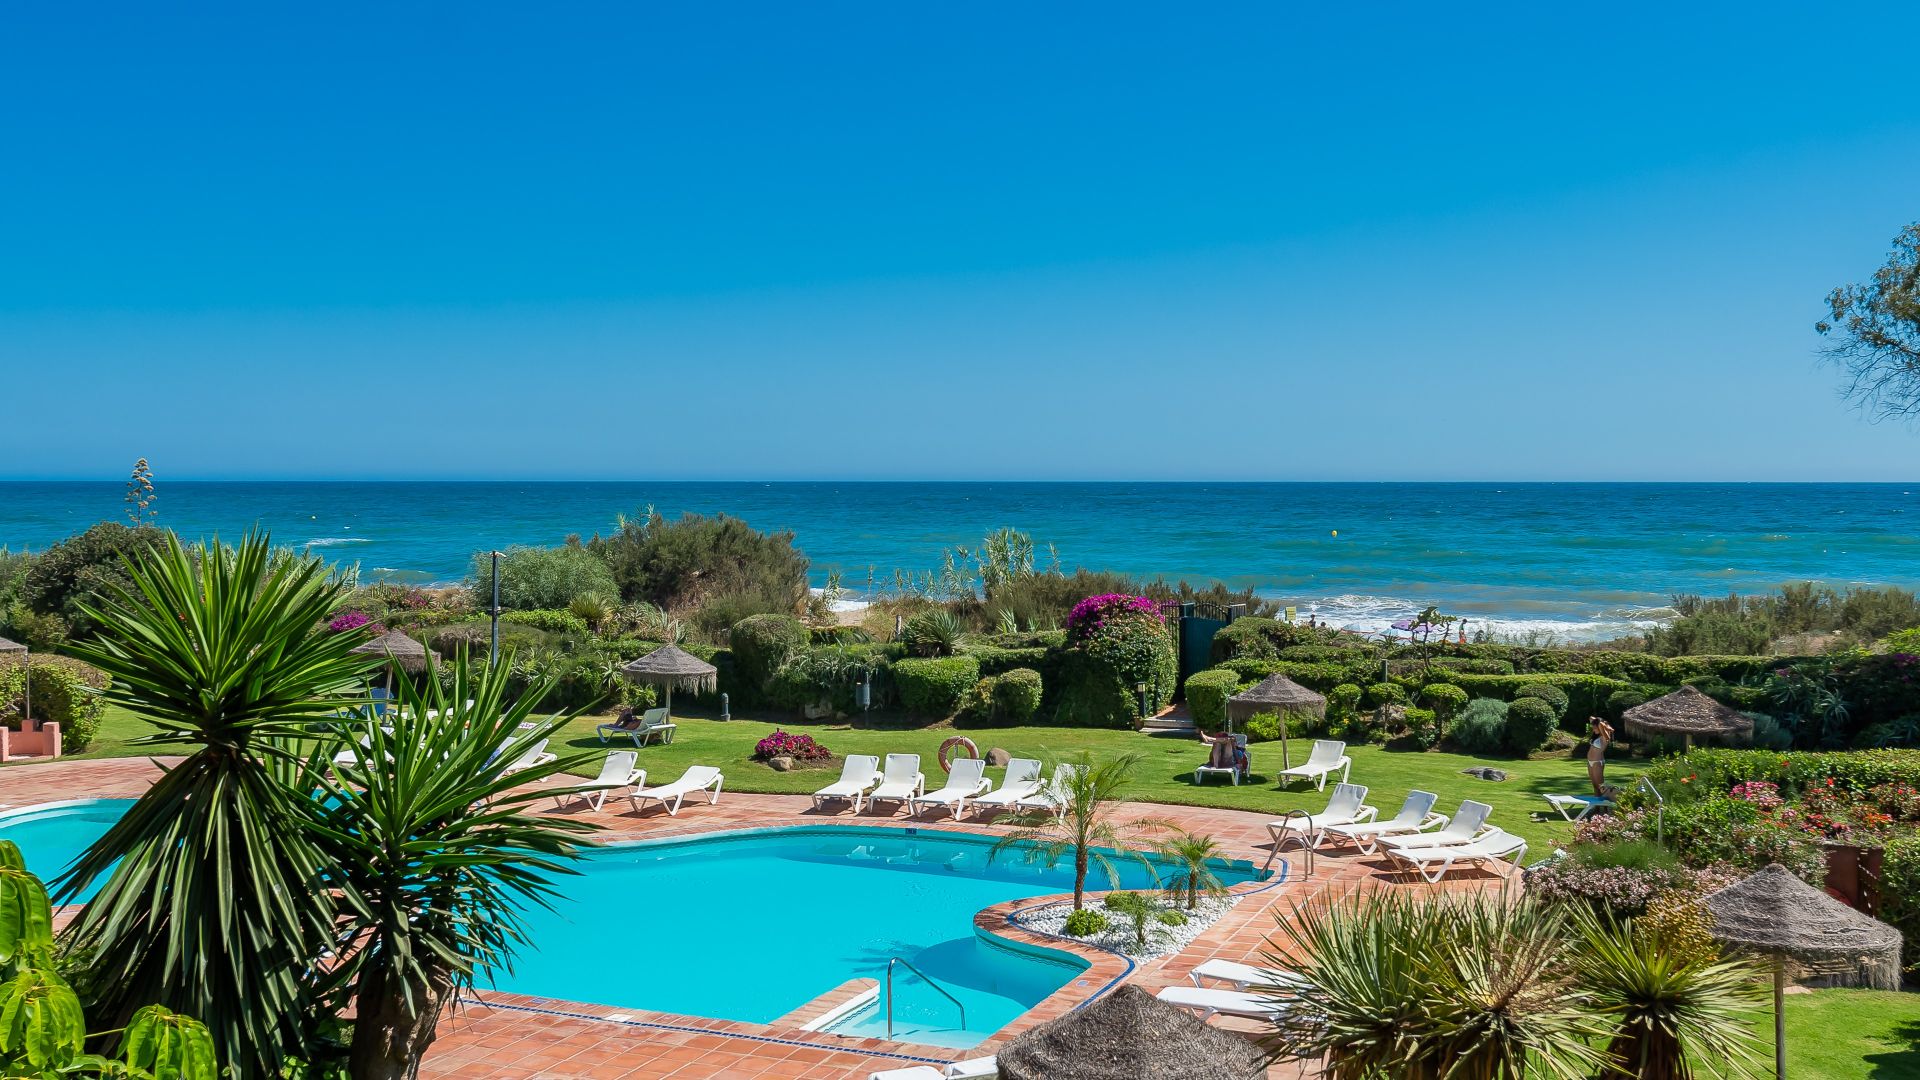 Splendid apartment on the beachfront with sea views | Engel & Völkers Marbella